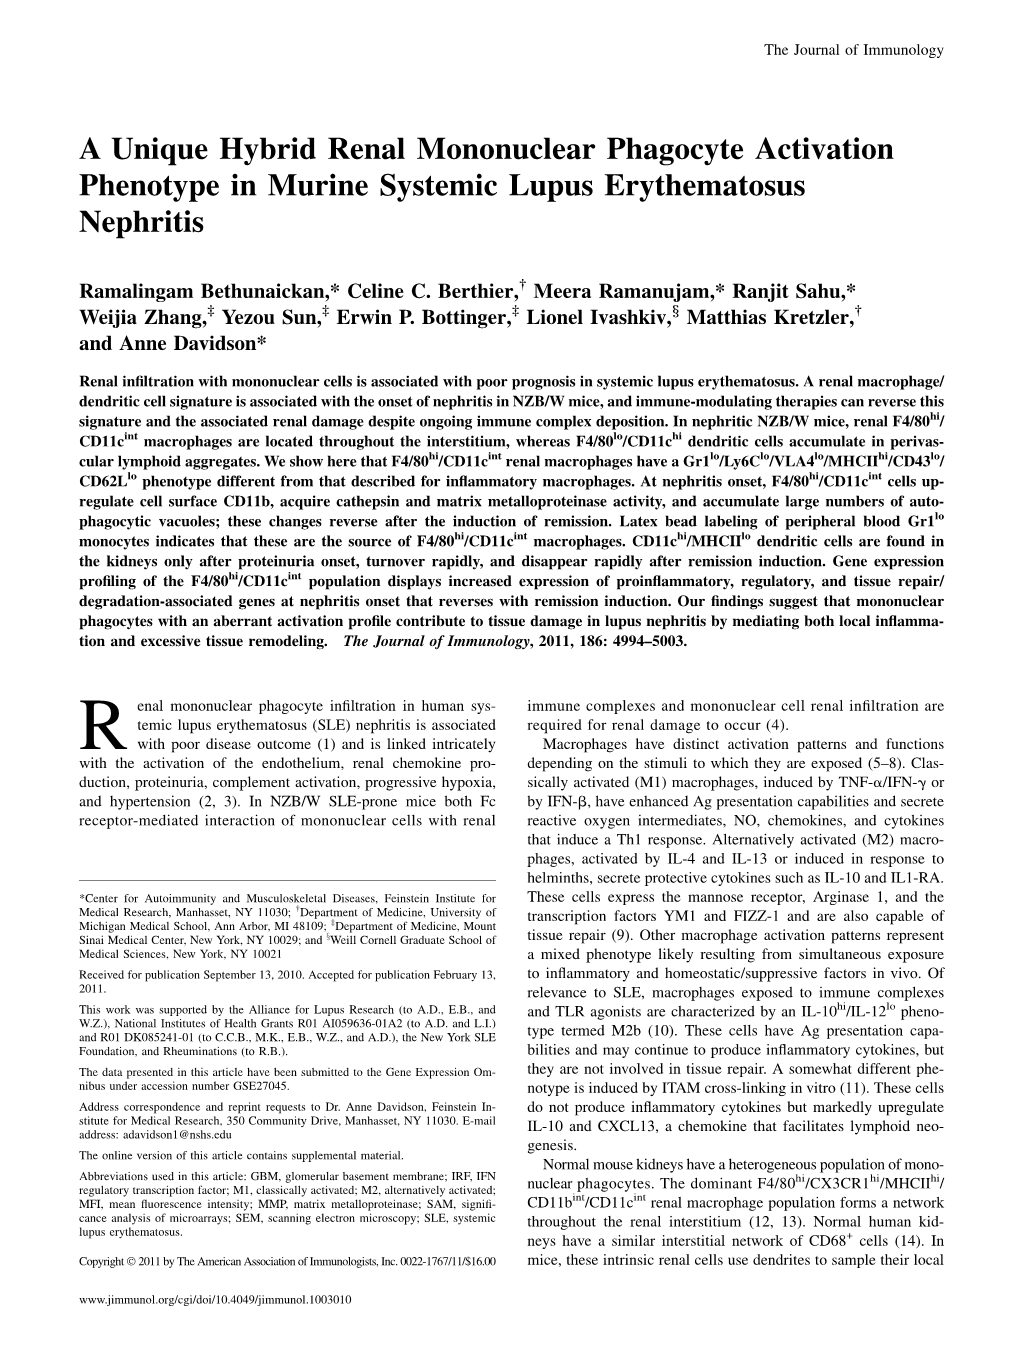 Systemic Lupus Erythematosus Nephritis Phagocyte Activation